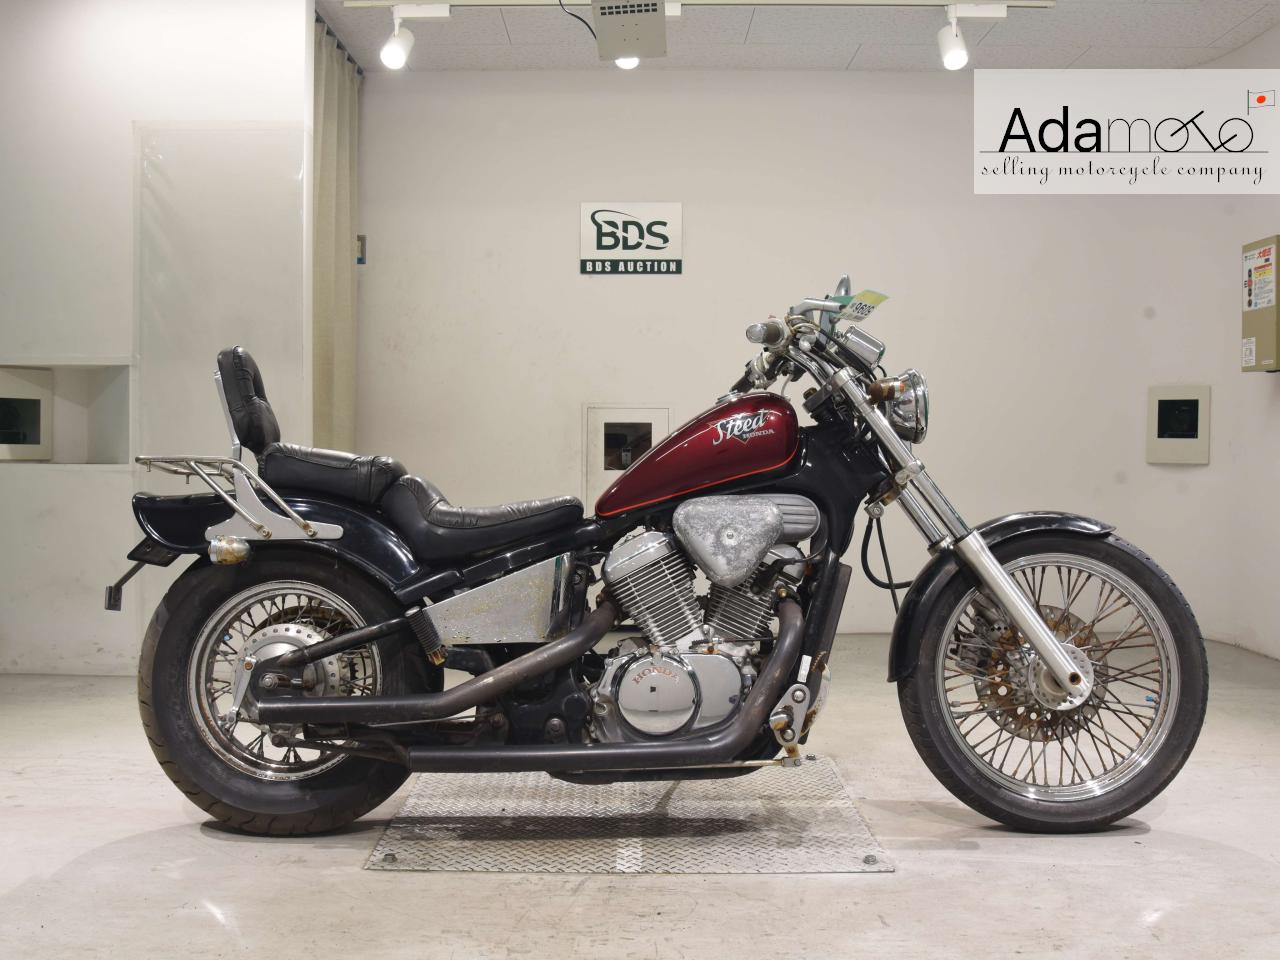 Honda STEED400 - Adamoto - Motorcycles from Japan